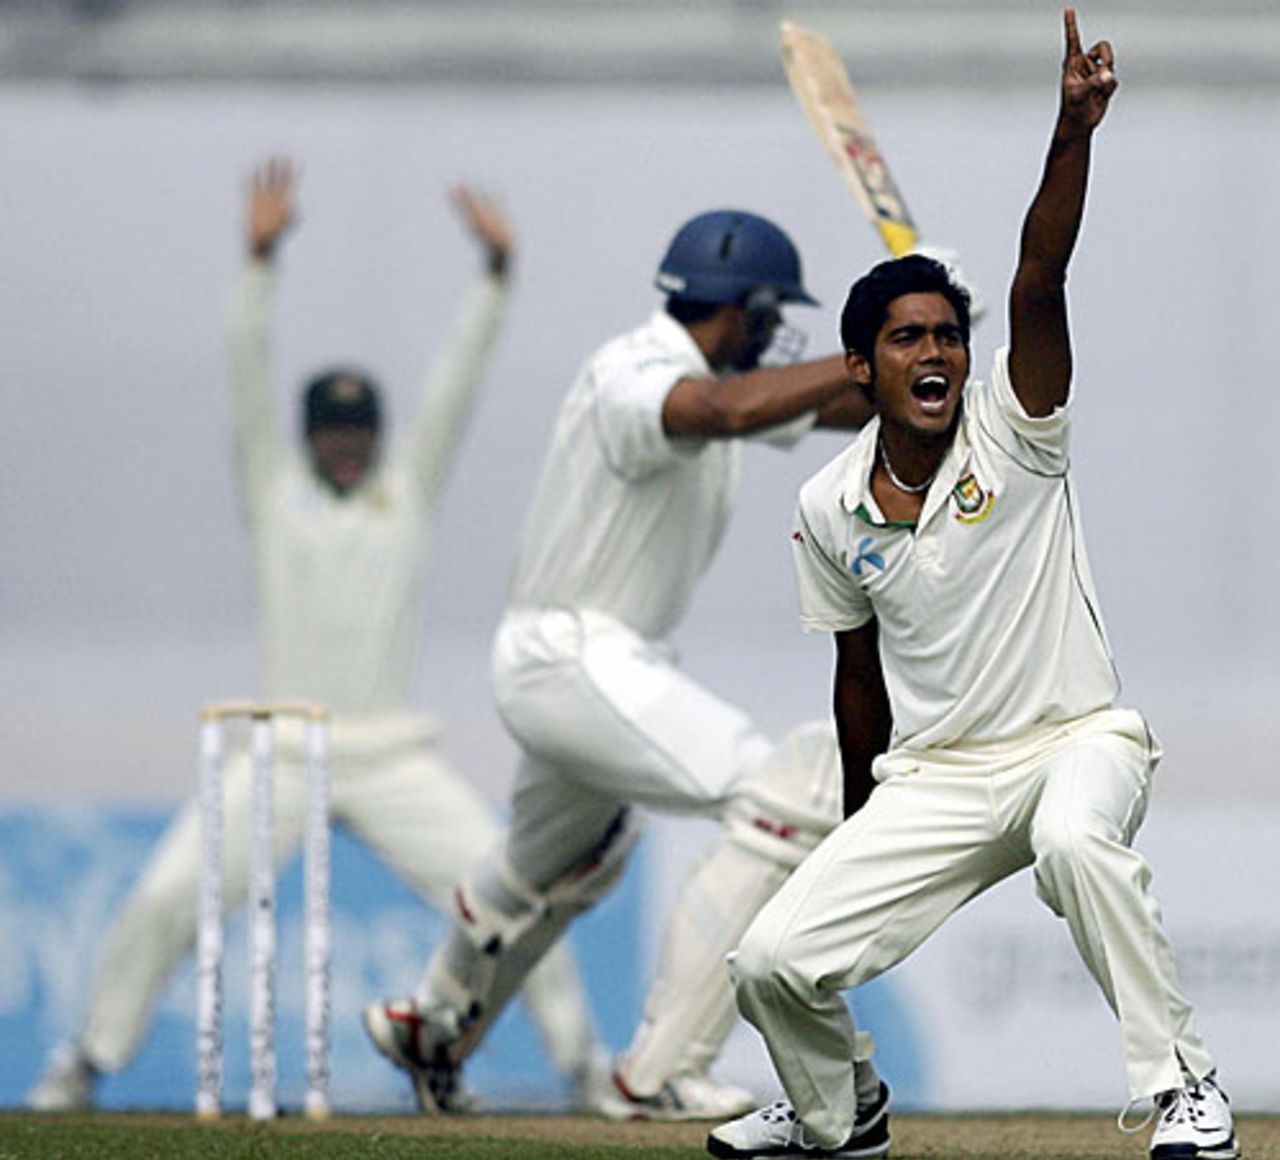 Mahbubul Alam appeals unsuccessfully for an lbw, Bangladesh v Sri Lanka, 1st Test, Mirpur, 1st day, December 26, 2008